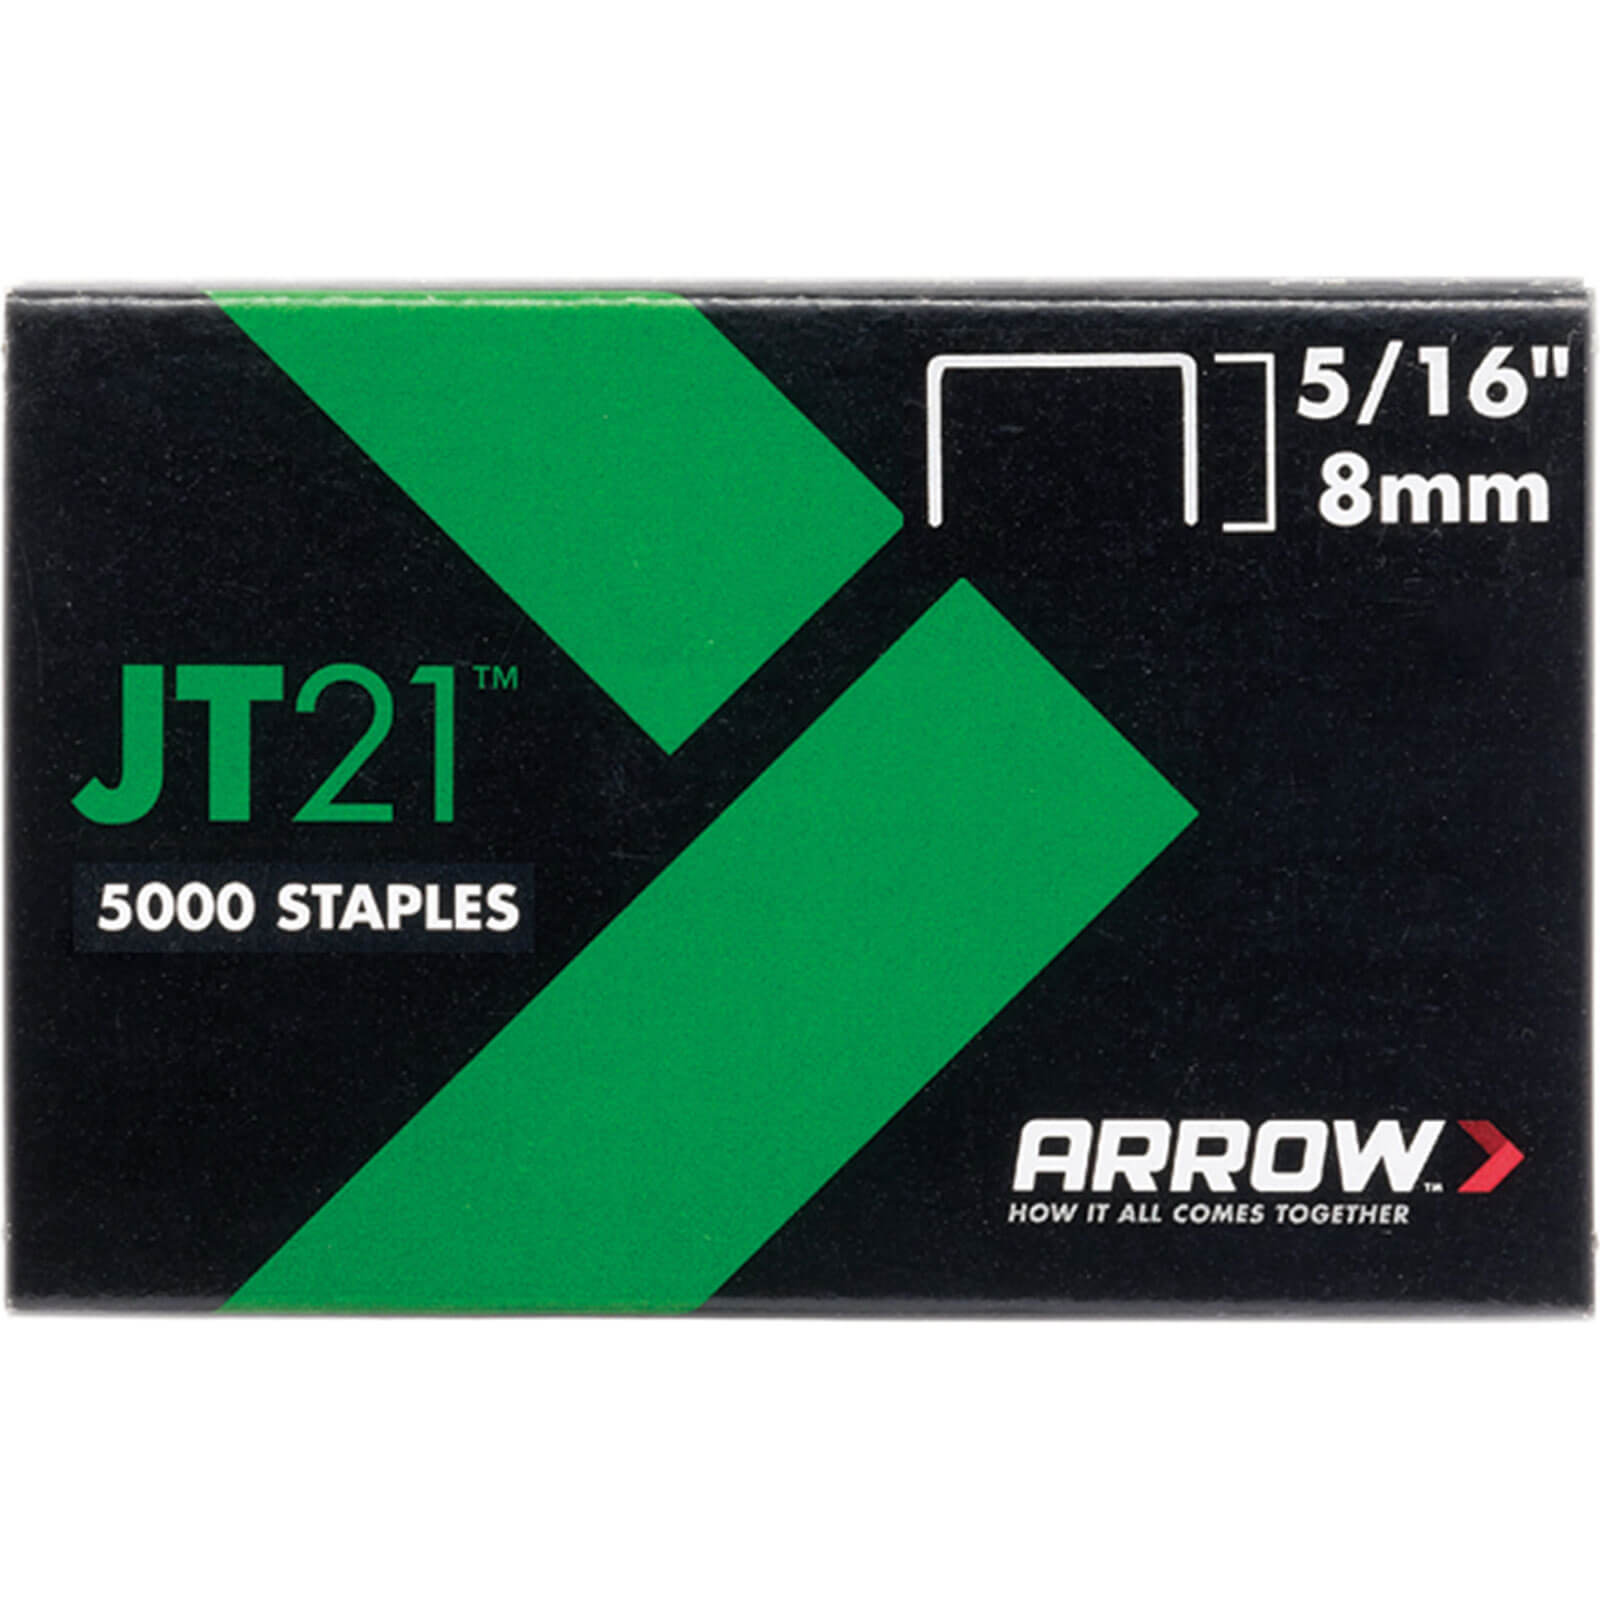 Arrow JT21 / T27 Staples pack of 5000 5/16"